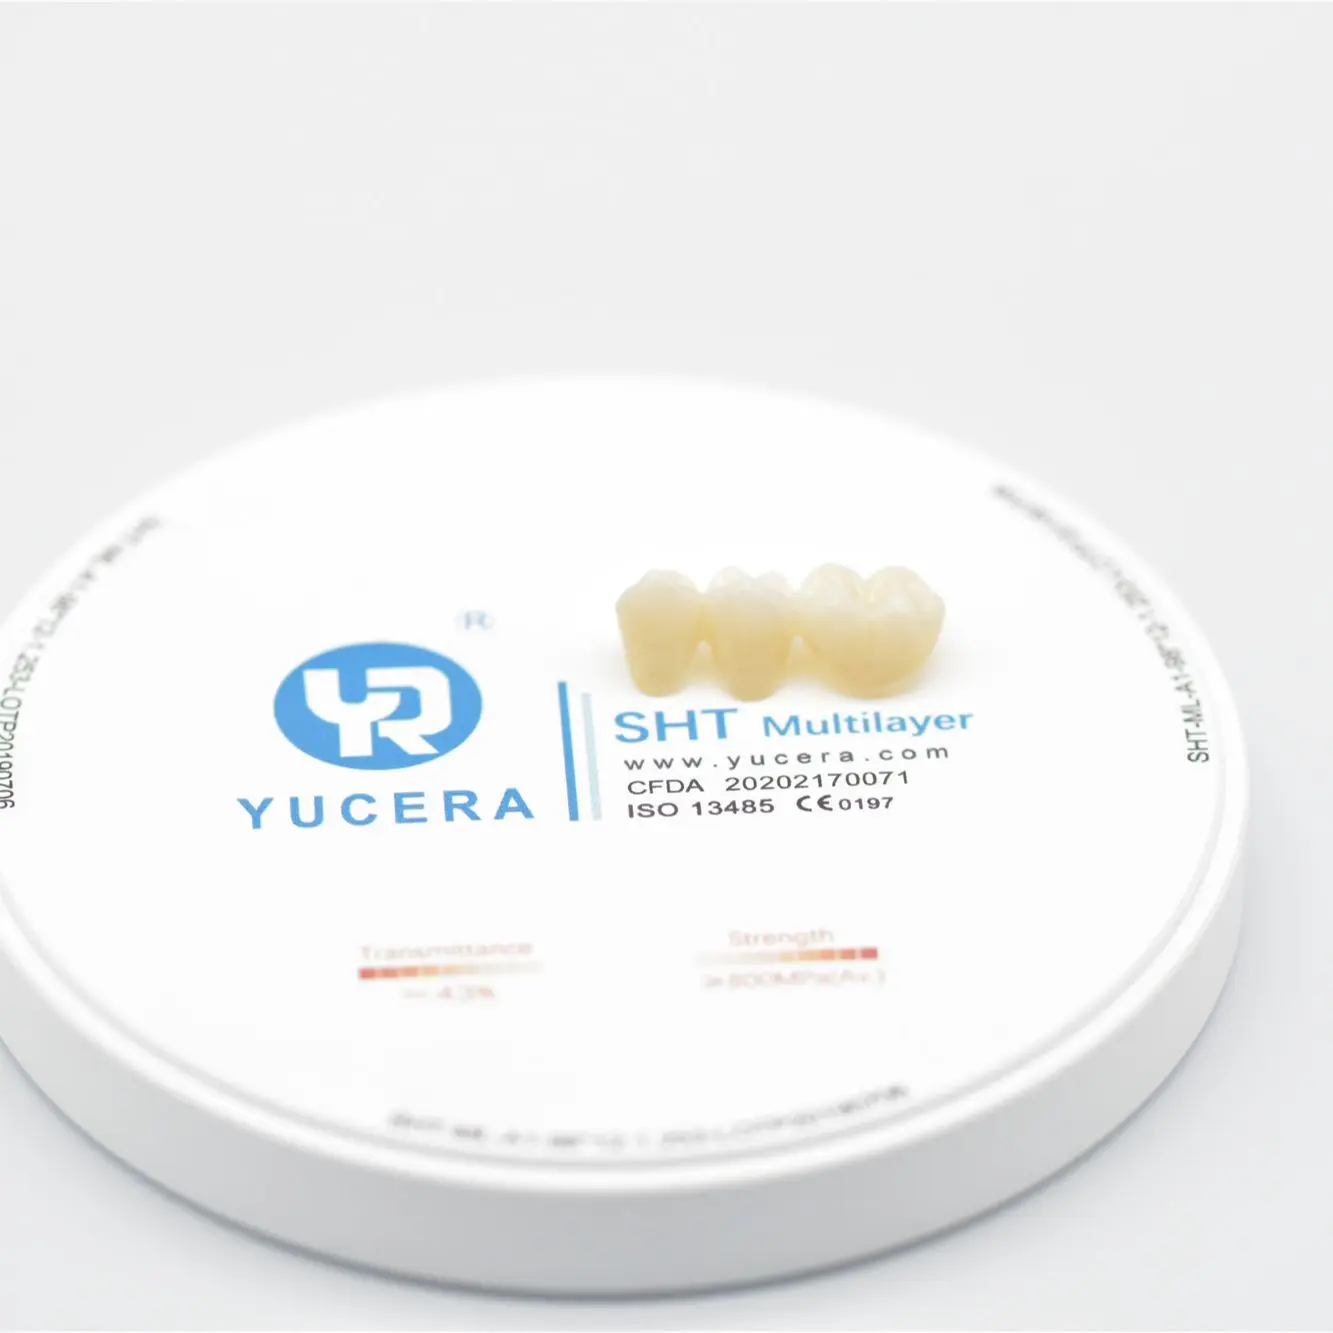 Best Price YUCERA 98mm B1 Dental Materials Preshaded SHT Multilayer Zirconia Blocks for Dental Lab CAD CAM Open System